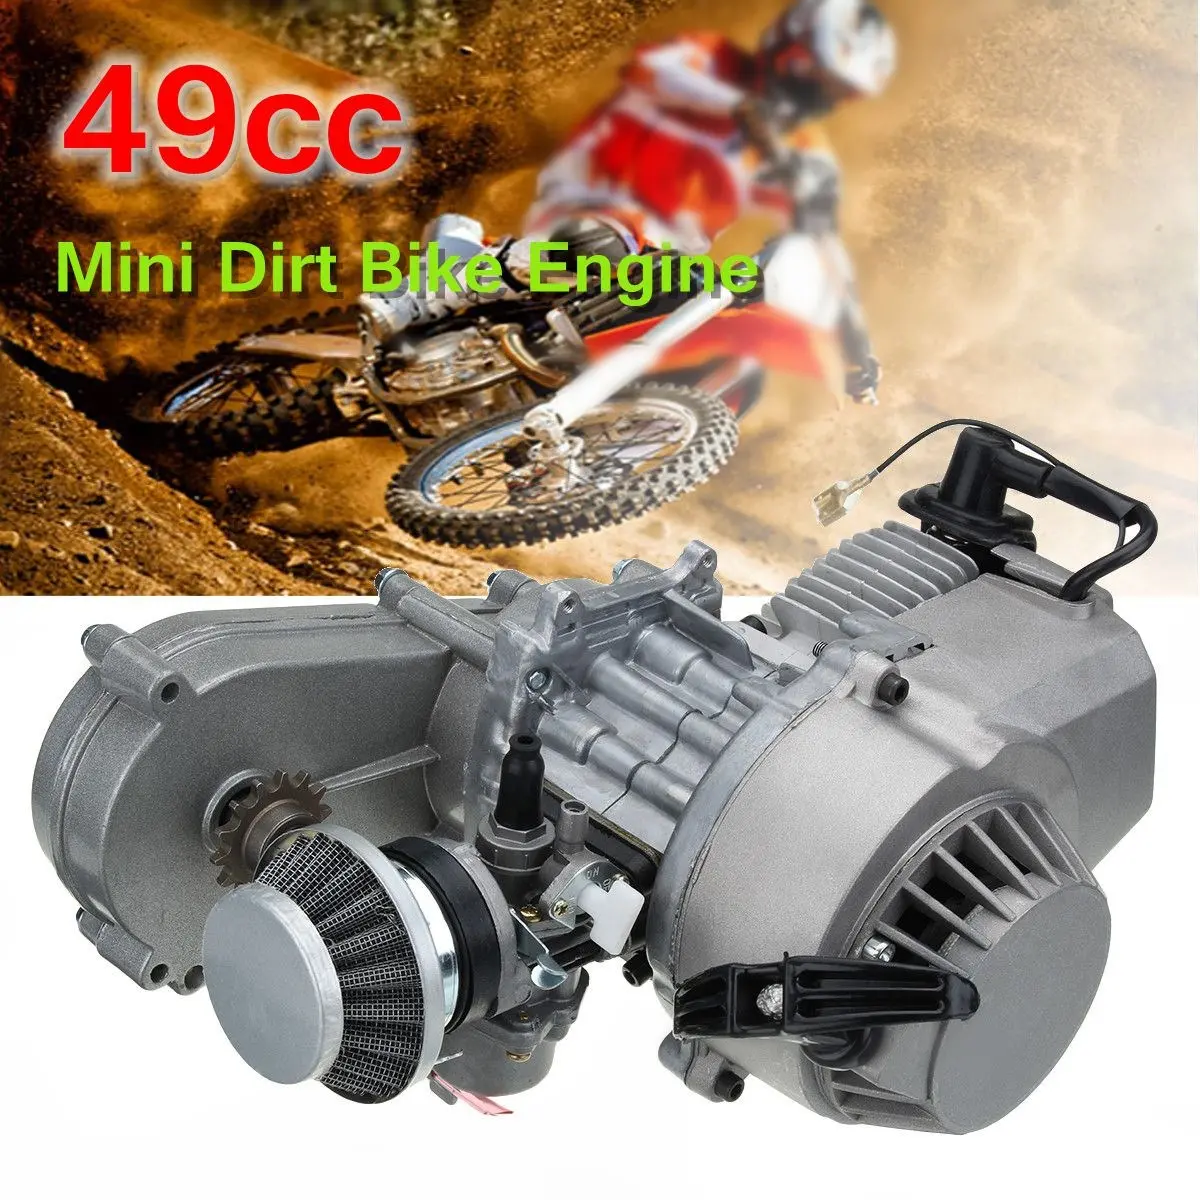 49cc Dirt Bike Engine with clutch pullstart air filter carburettor coil clutch plug